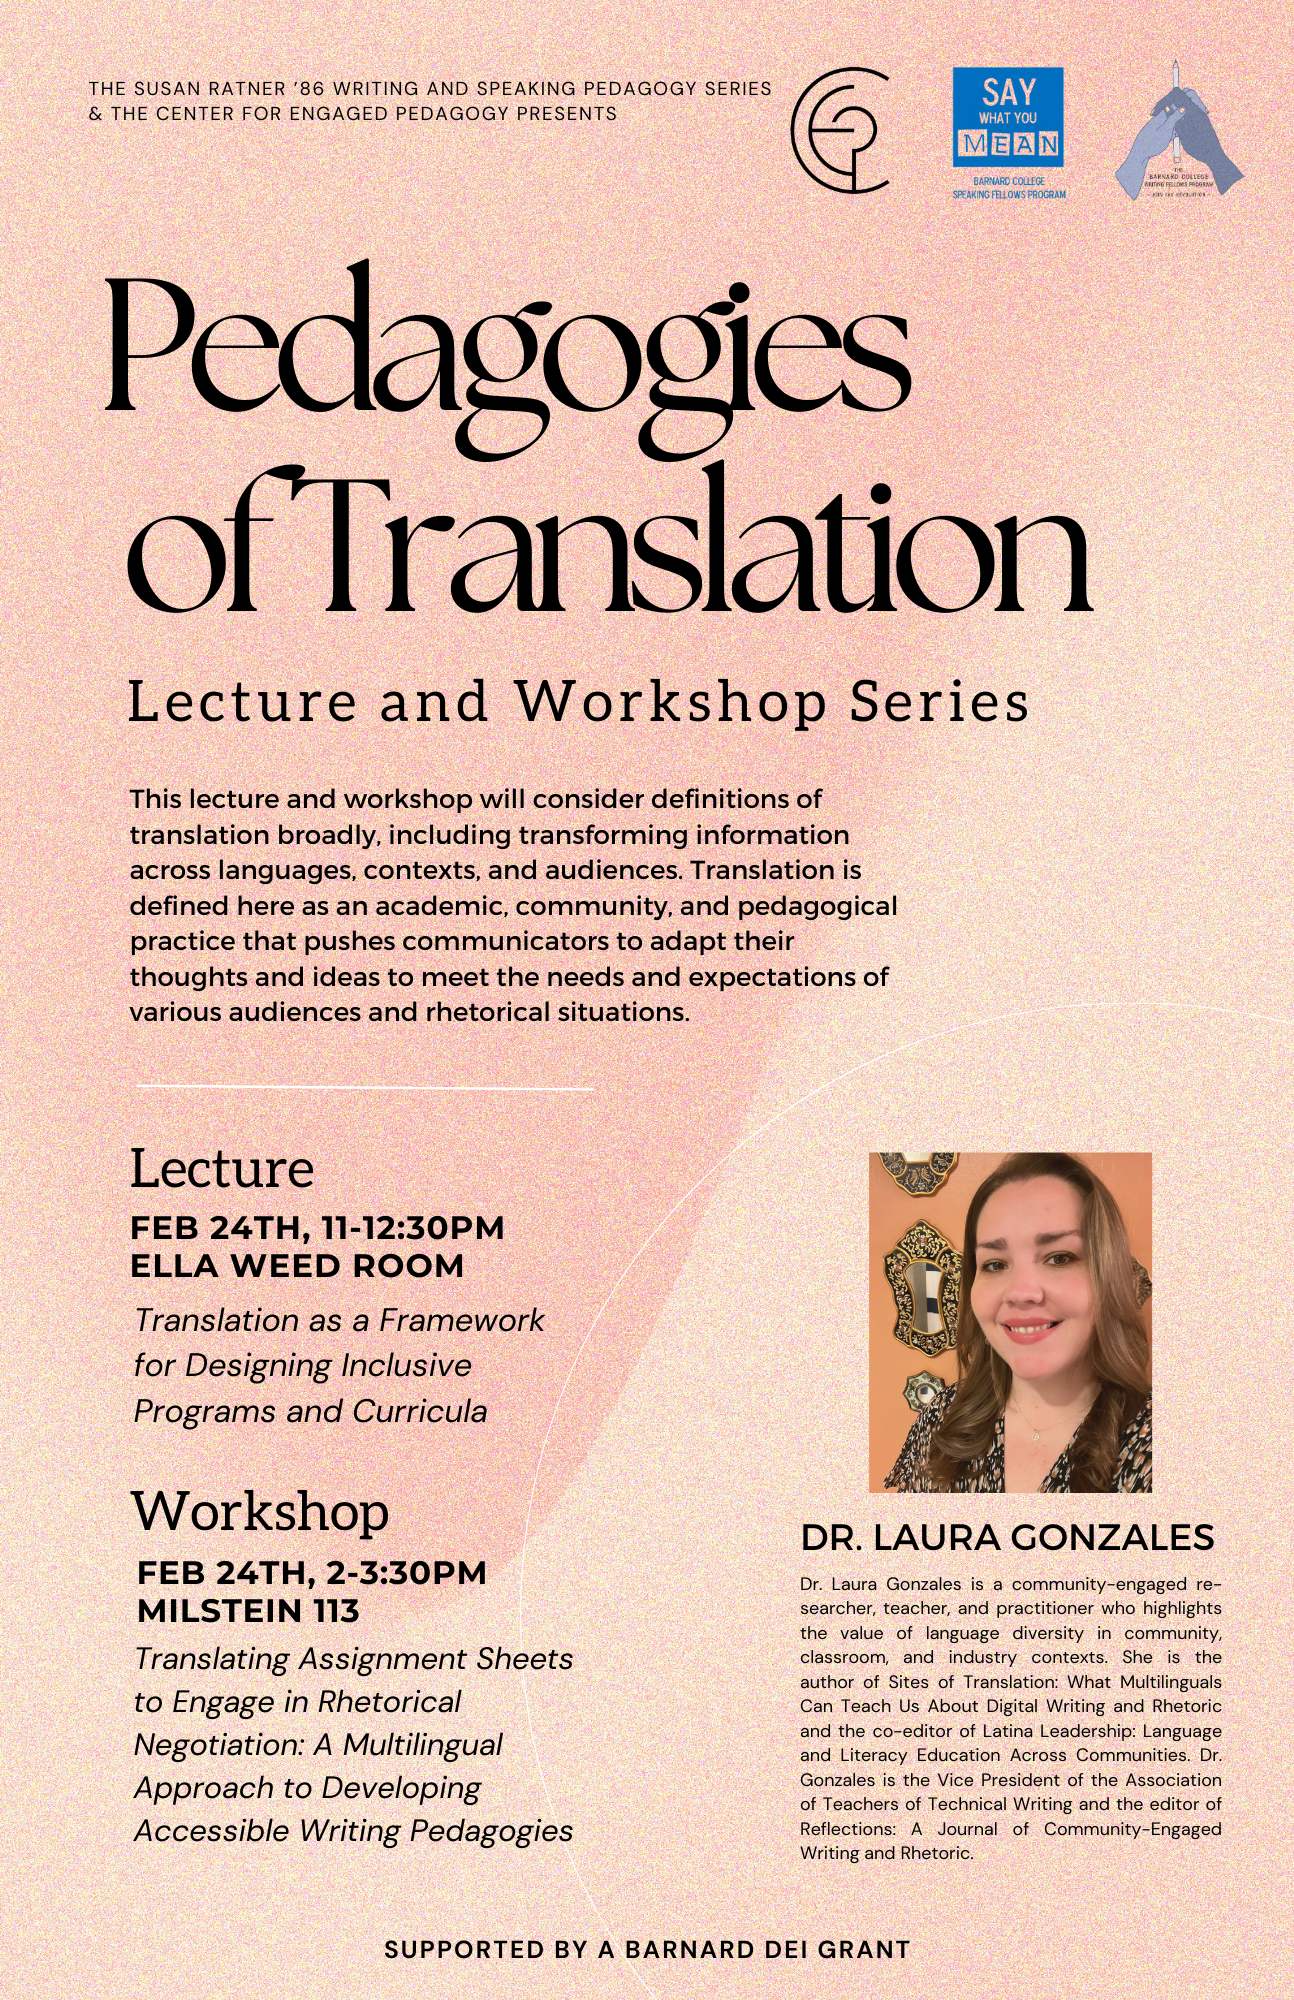 Pedagogies of Translation event details on orange background.